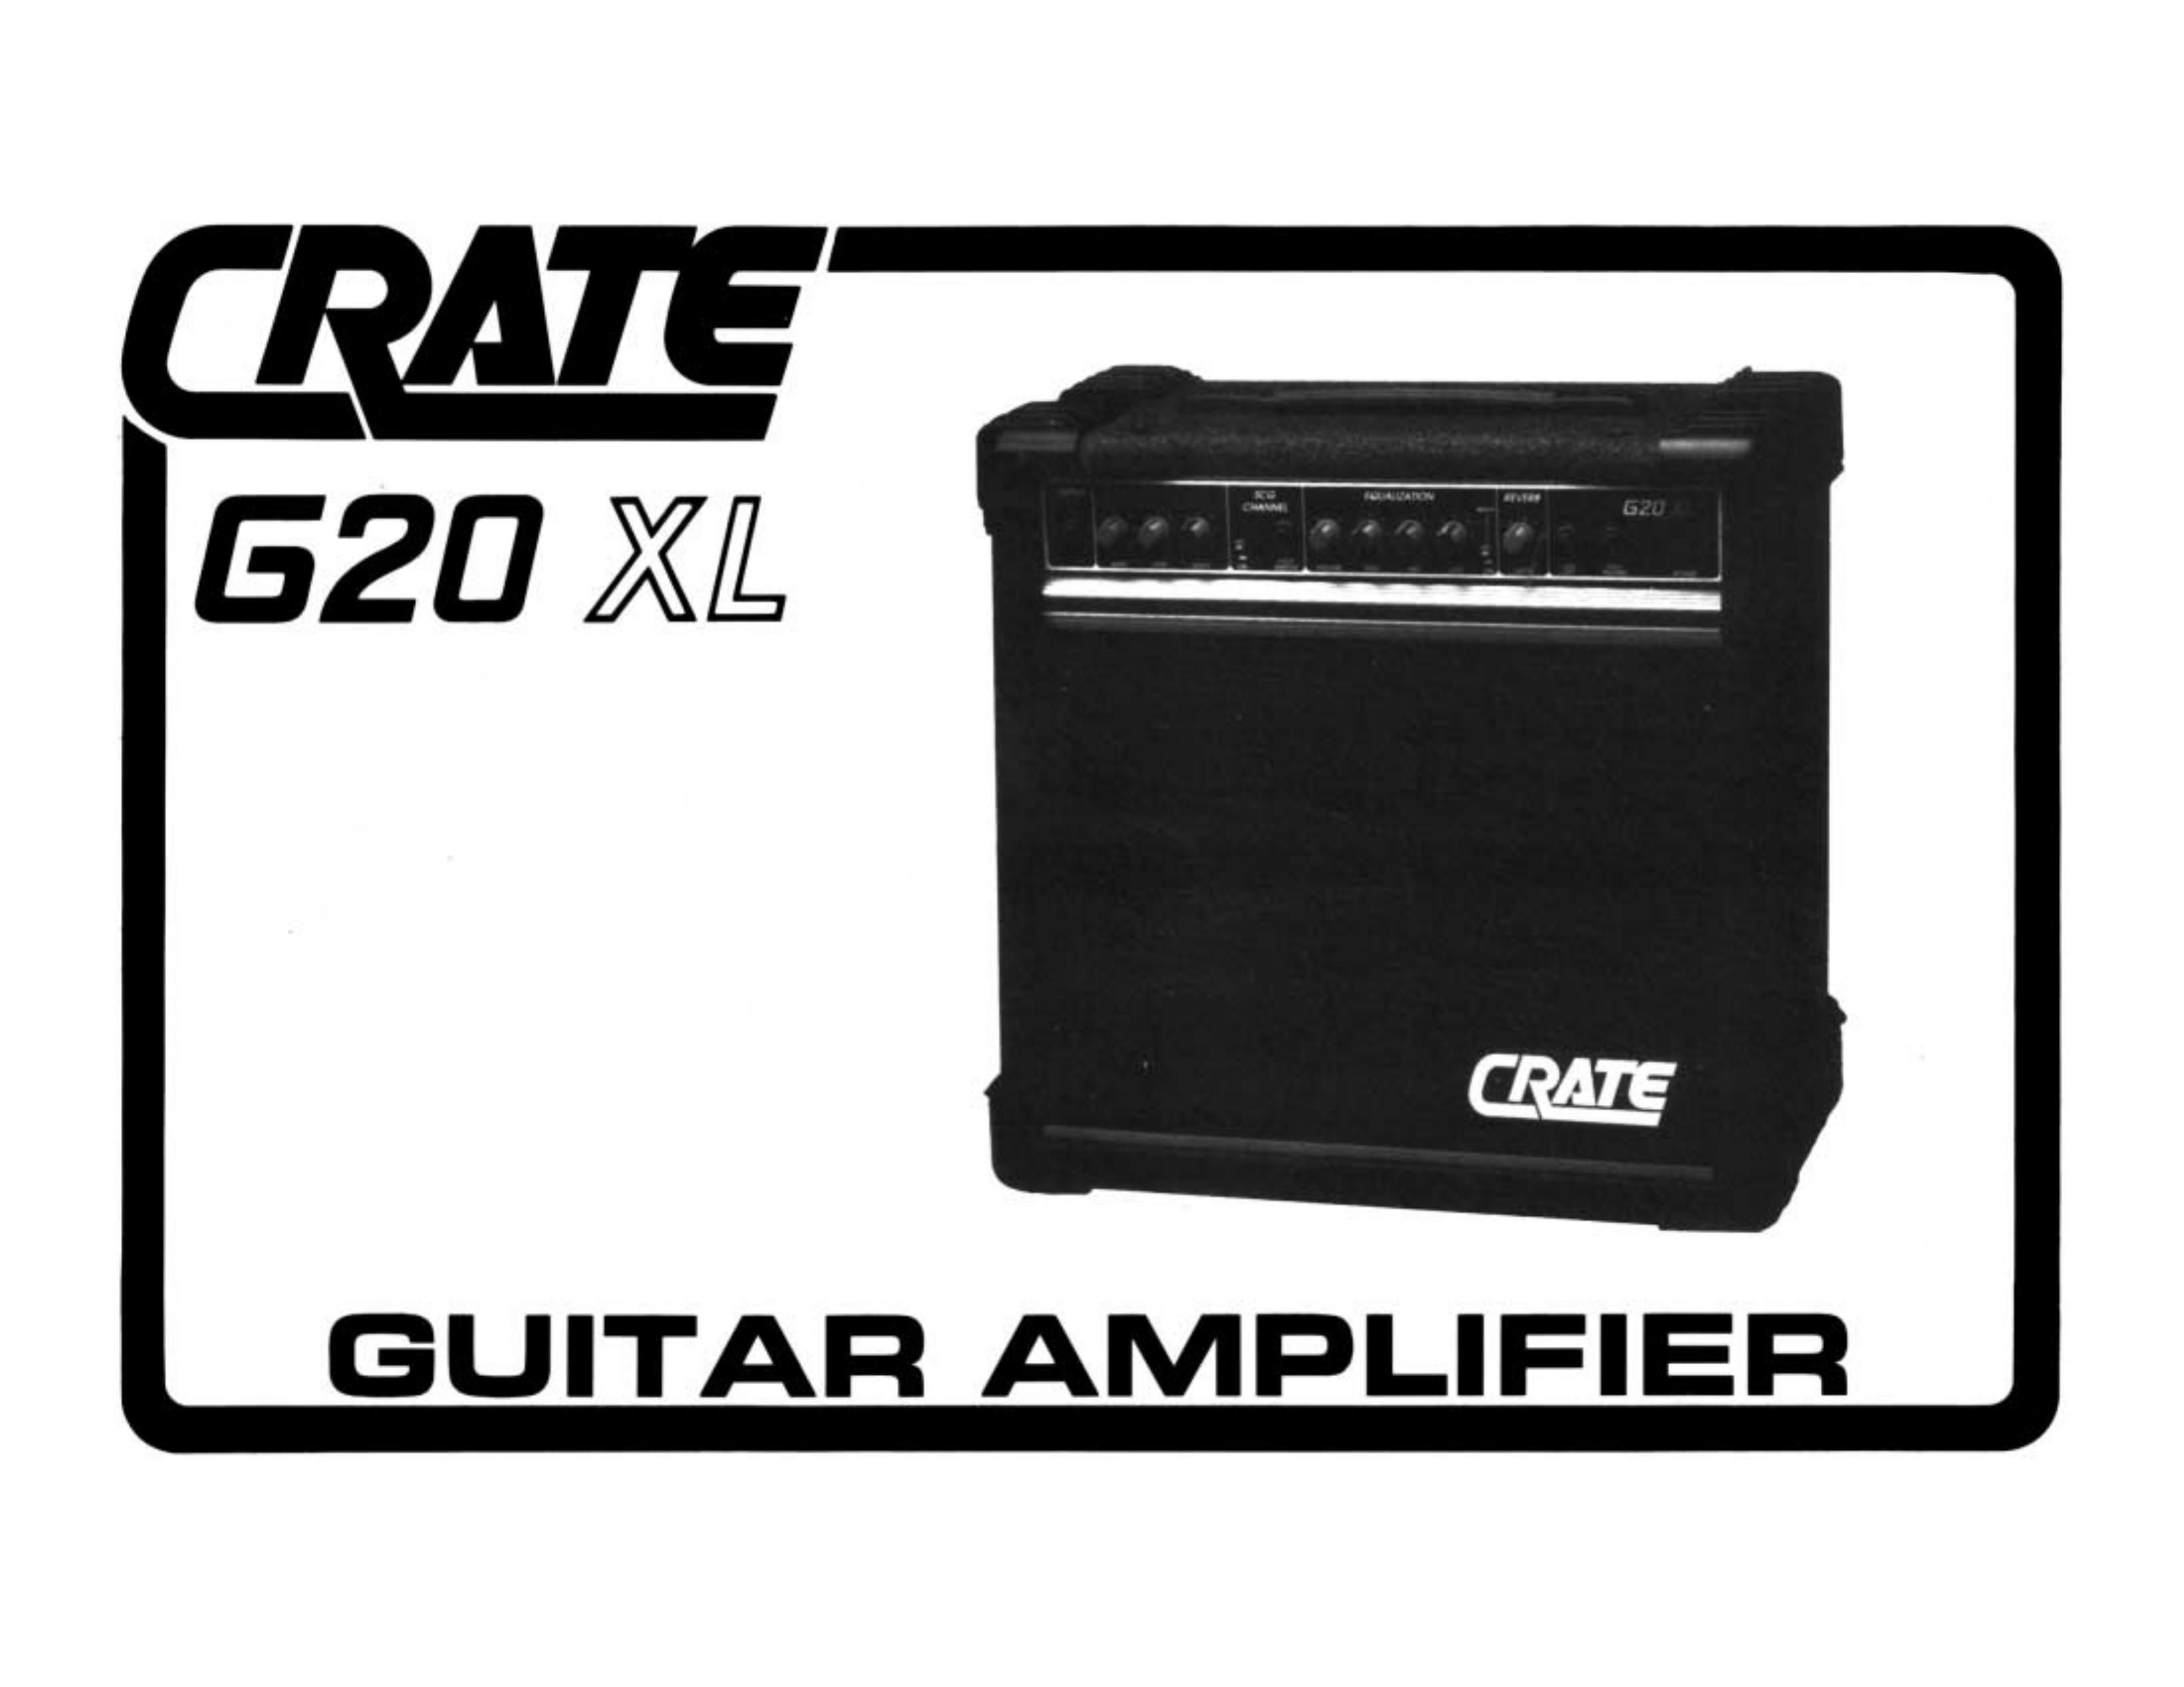 Crate Amplifiers G20 XL Musical Instrument Amplifier User Manual